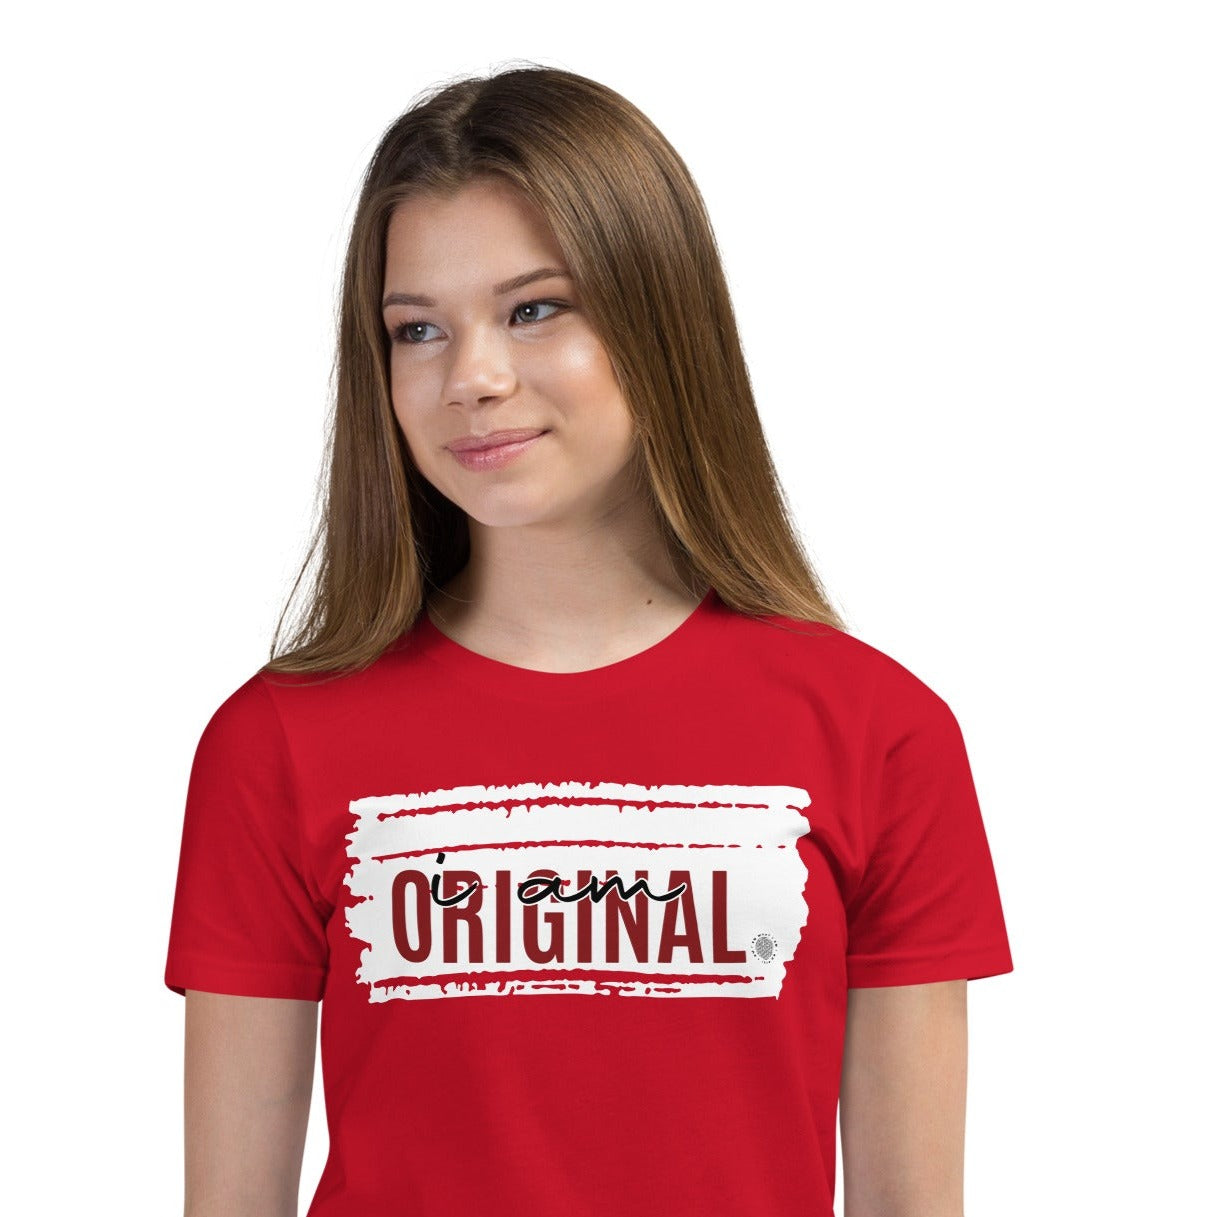 I Am Original Youth T-Shirt red